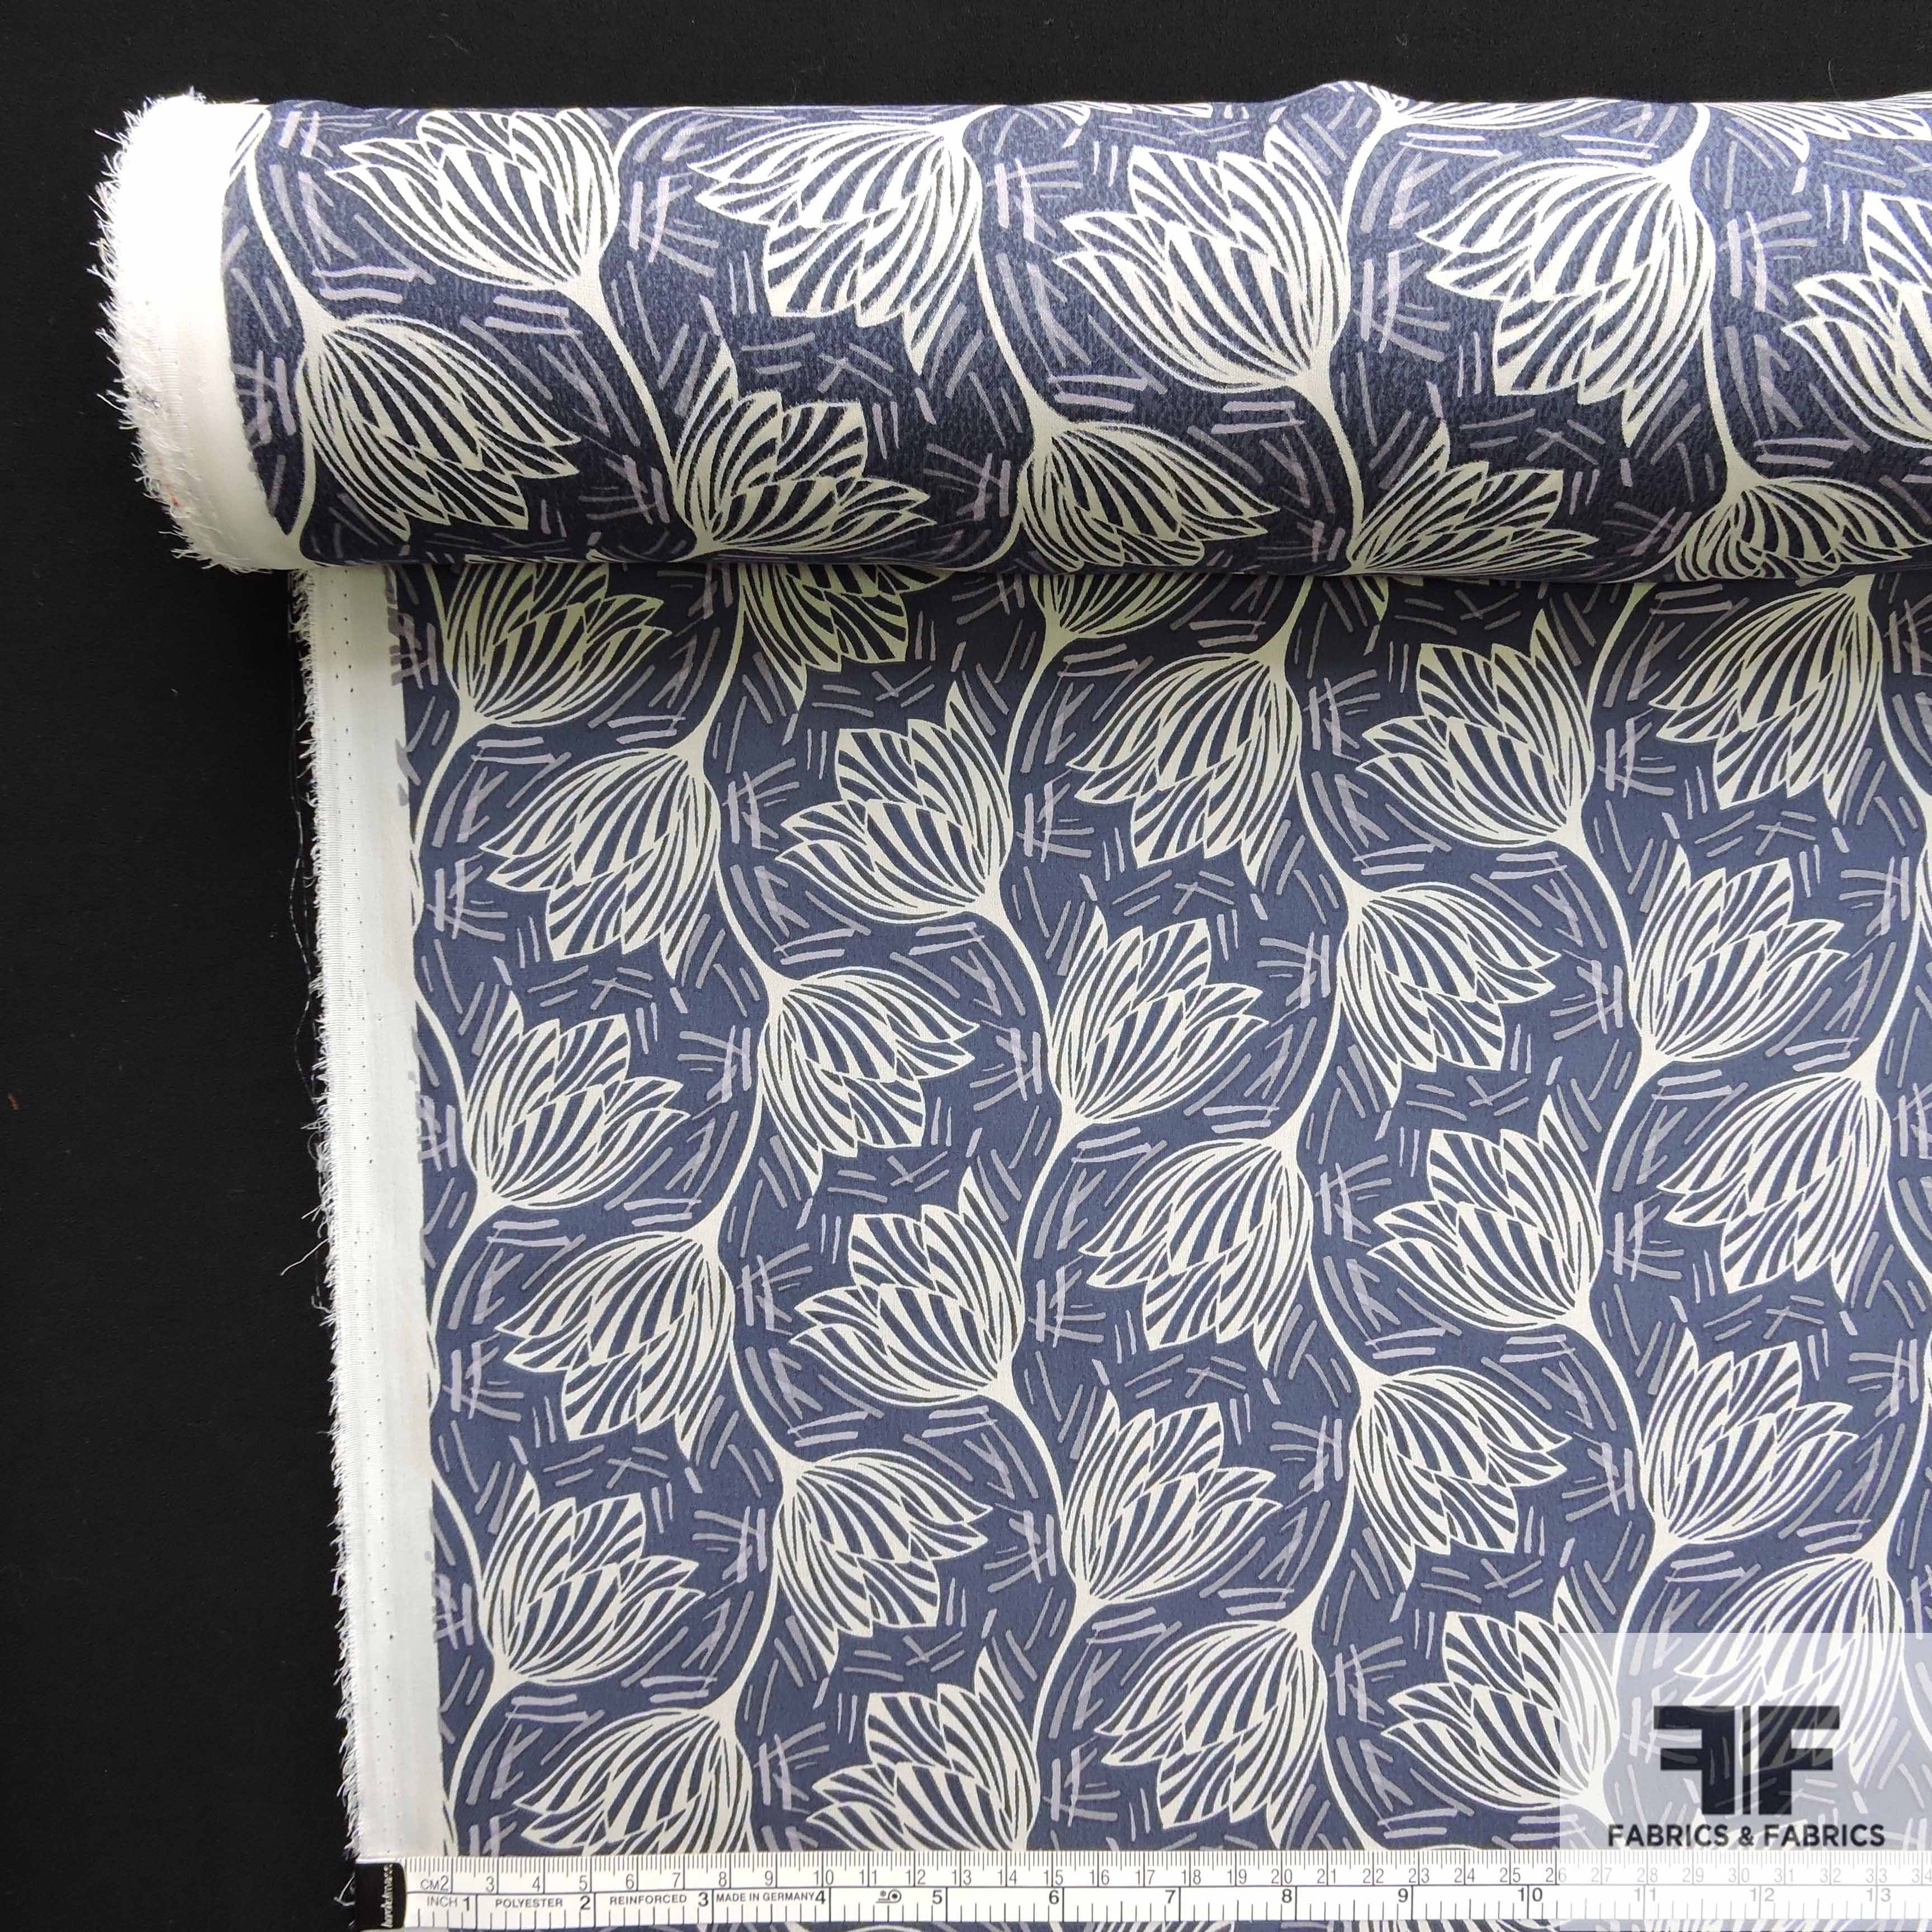 Abstract Floral Printed Silk Chiffon - Blue/White - Fabrics & Fabrics NY